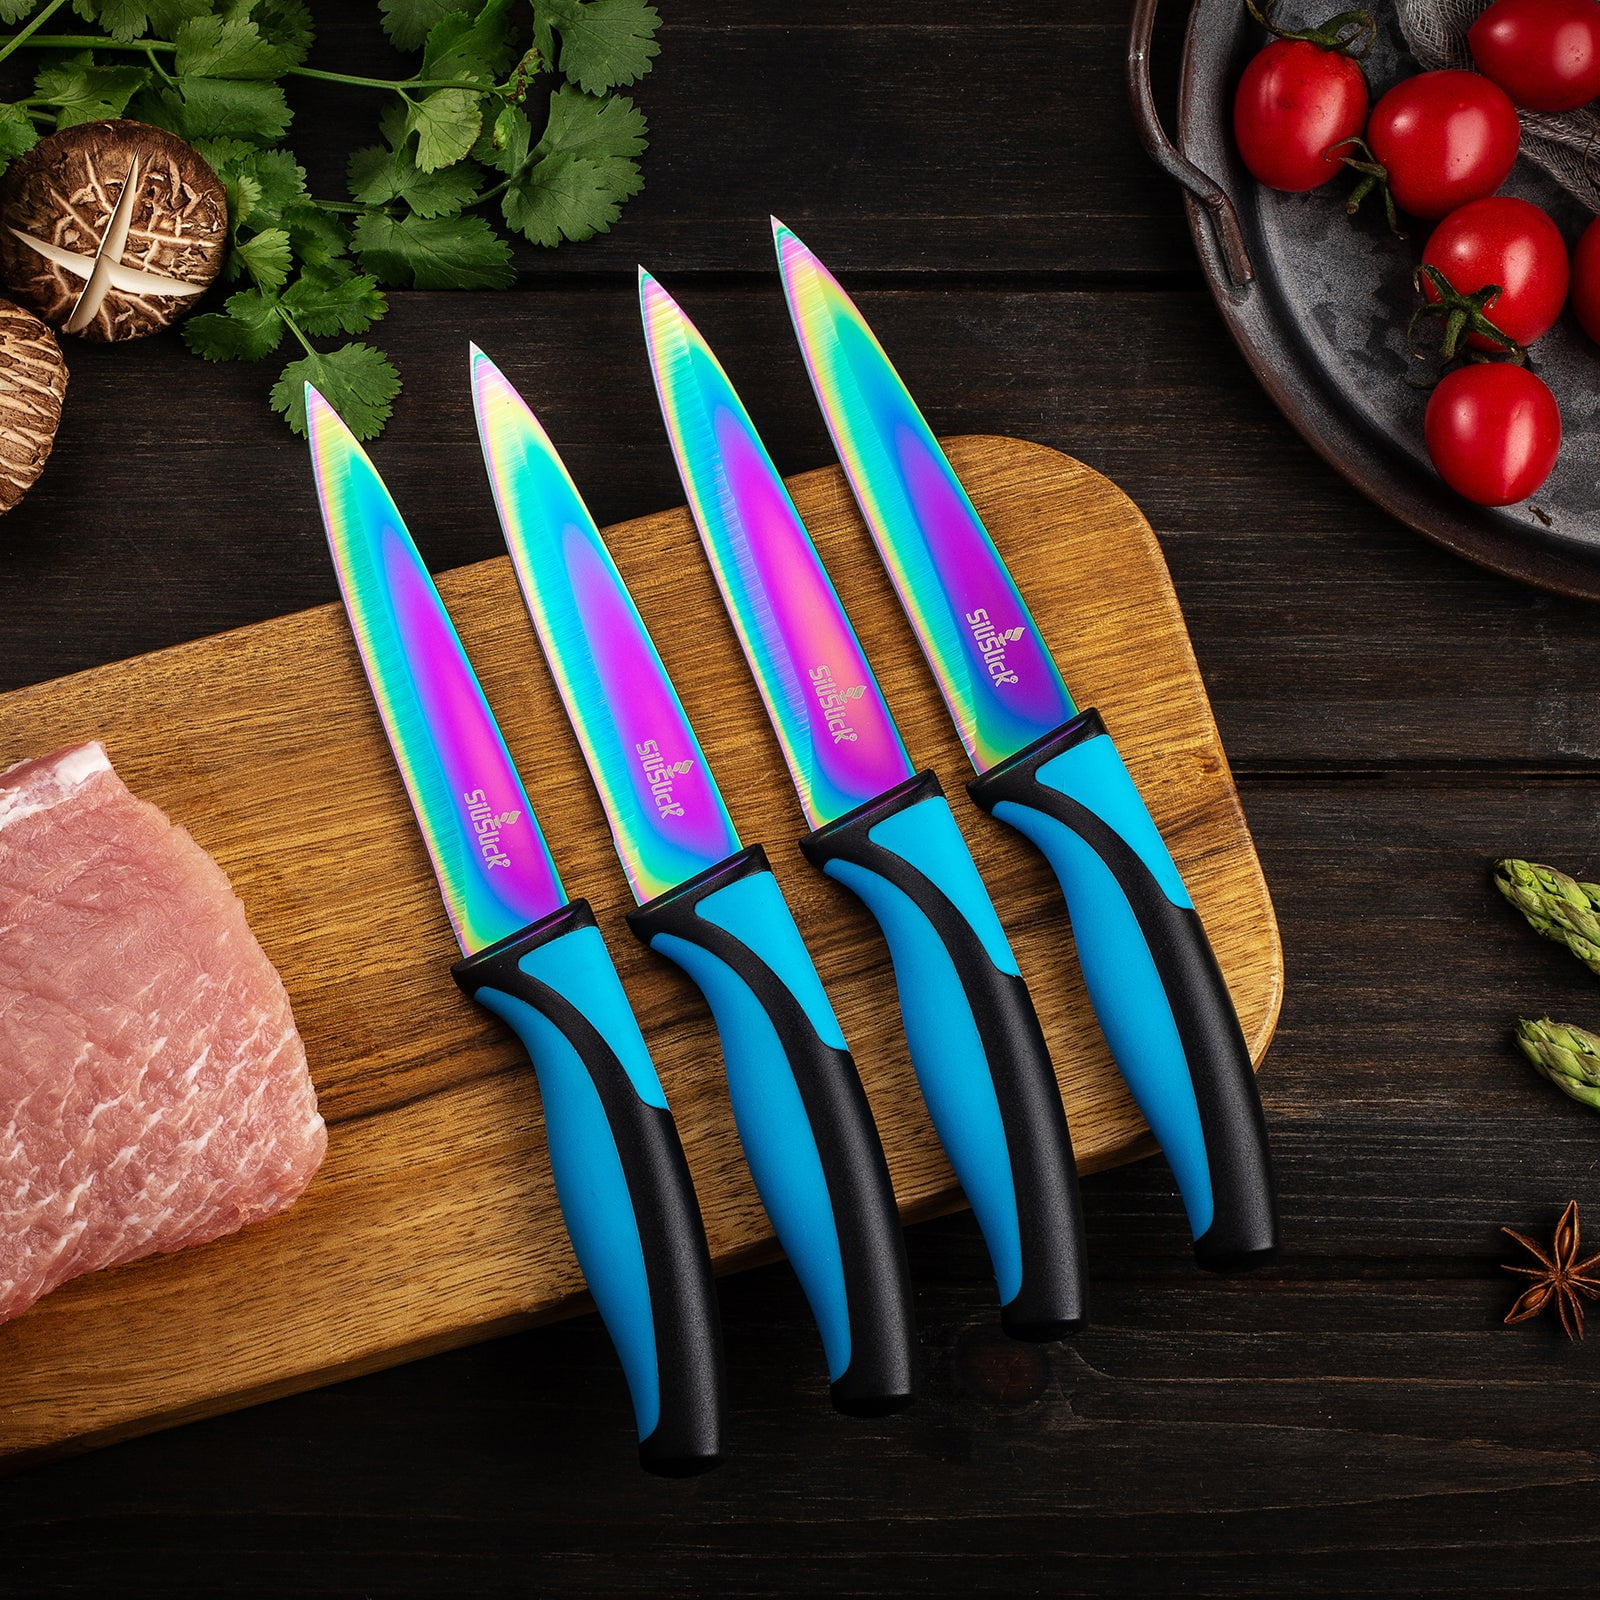 SiliSlick Stainless Steel Steak Knife Set - Titanium Coated Colorful Kitchen Knives with Straight Edge, Smooth & Sharp - Rainbow Iridescent Kitchen